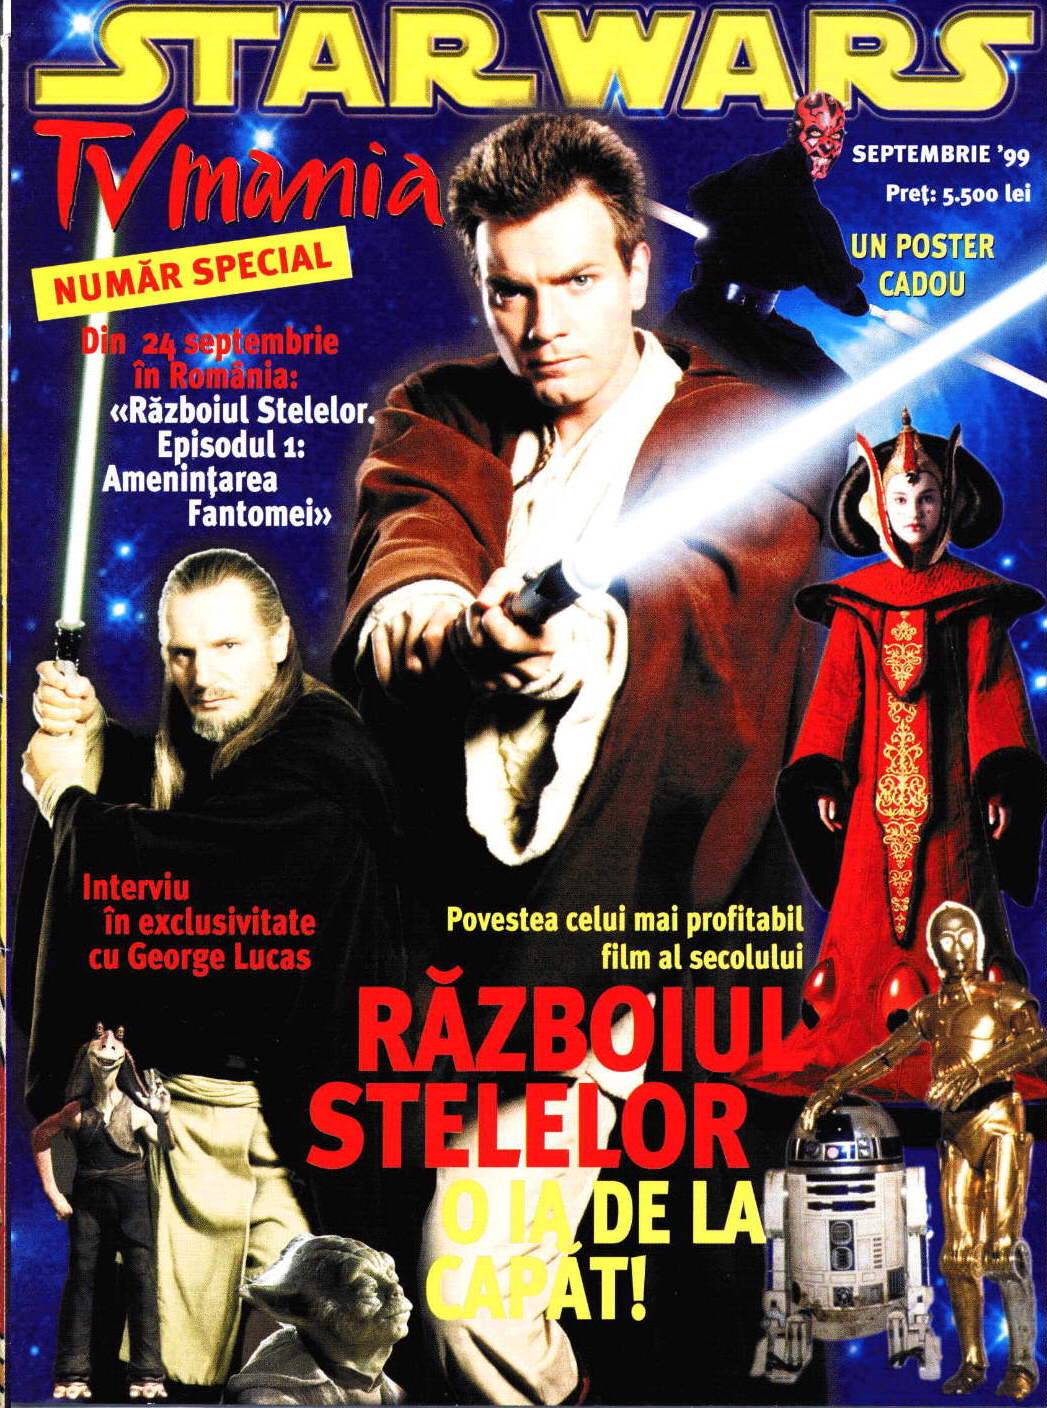 Romanian Star Wars magazine